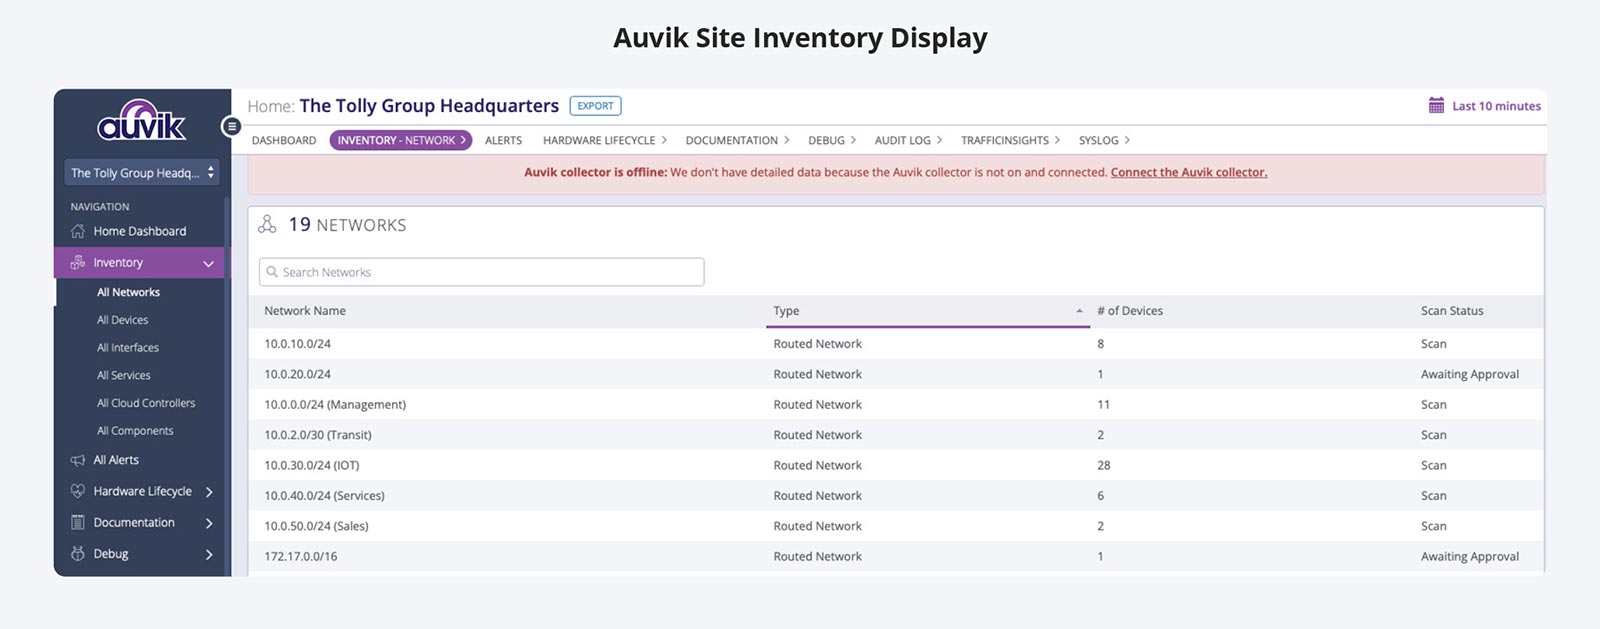 Auvik Site Inventory Display